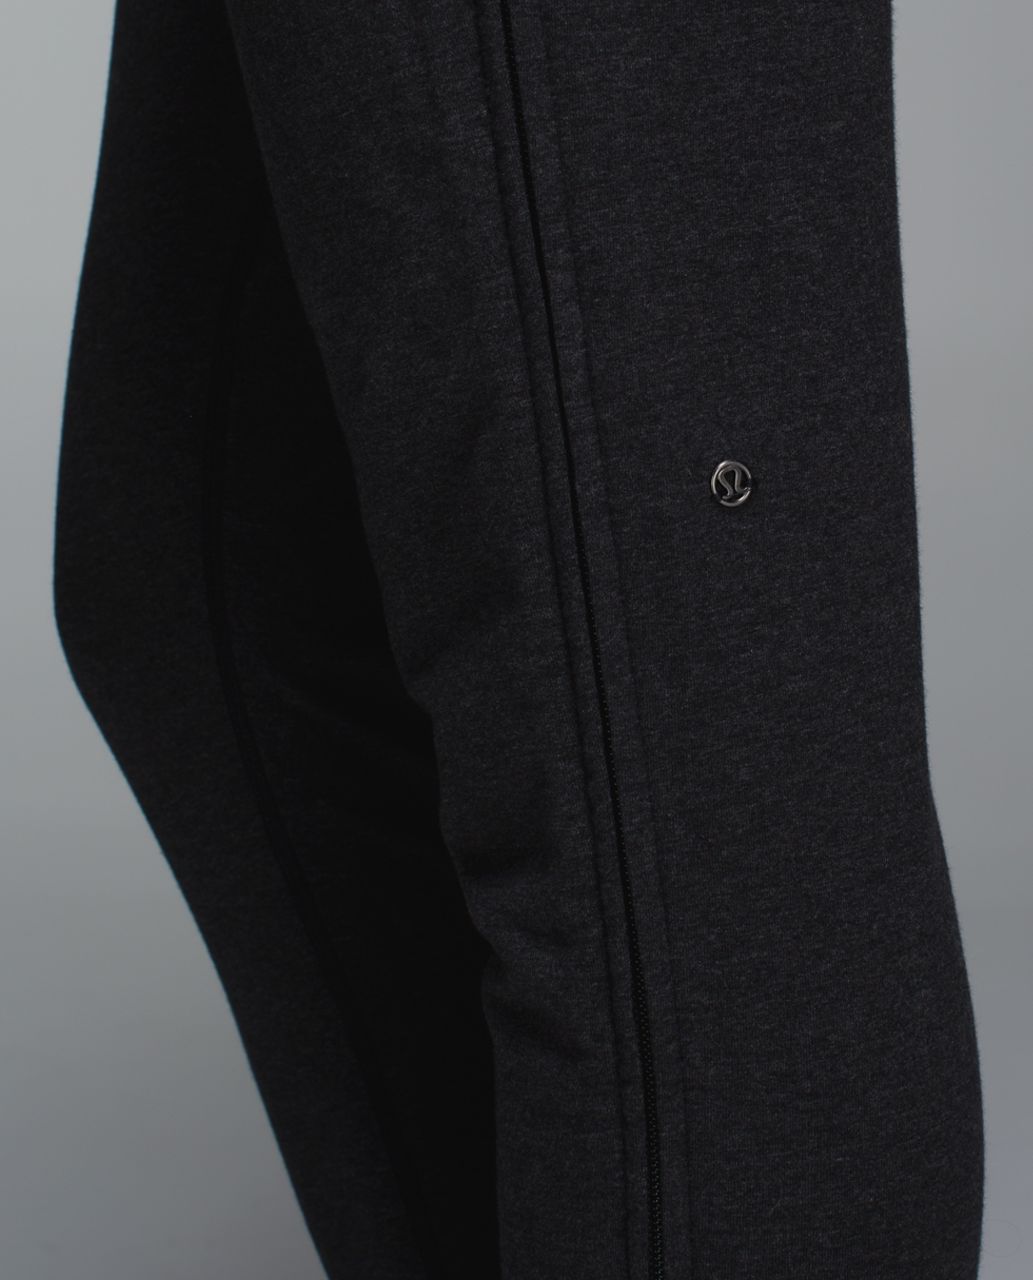 Lululemon Men’s Soft Jersey Tapered Pant Black Size Large 28 Inch Inseam